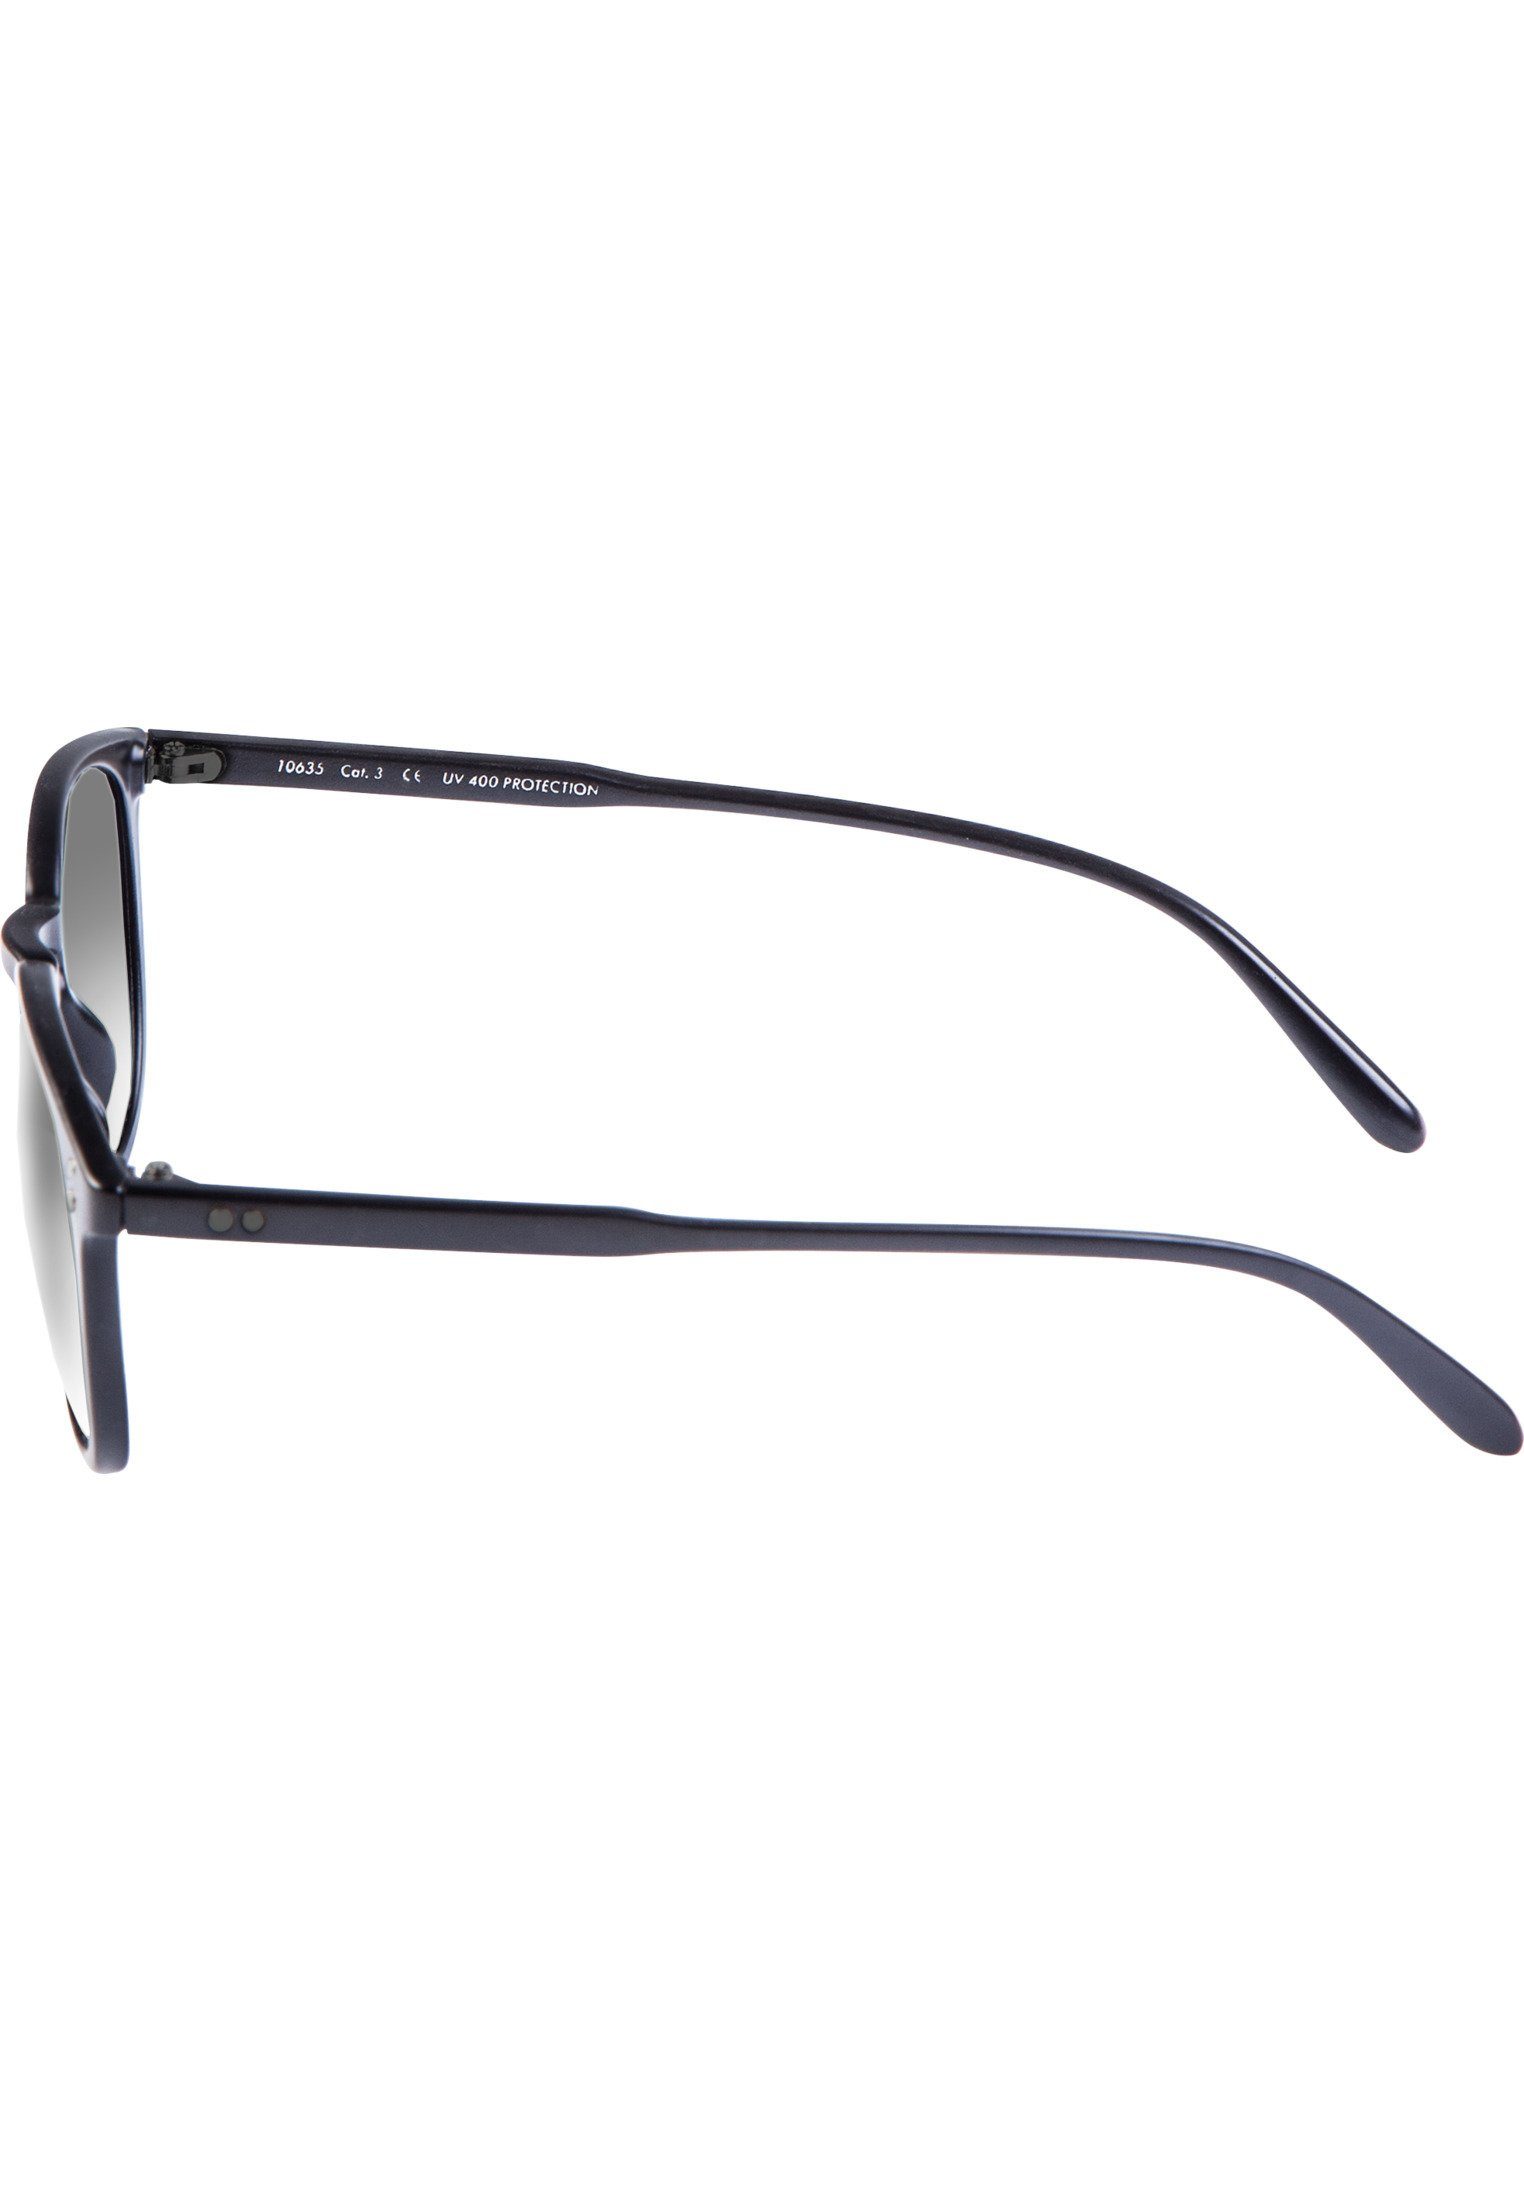 Sunglasses Youth Arthur blk/grn Accessoires Sonnenbrille MSTRDS